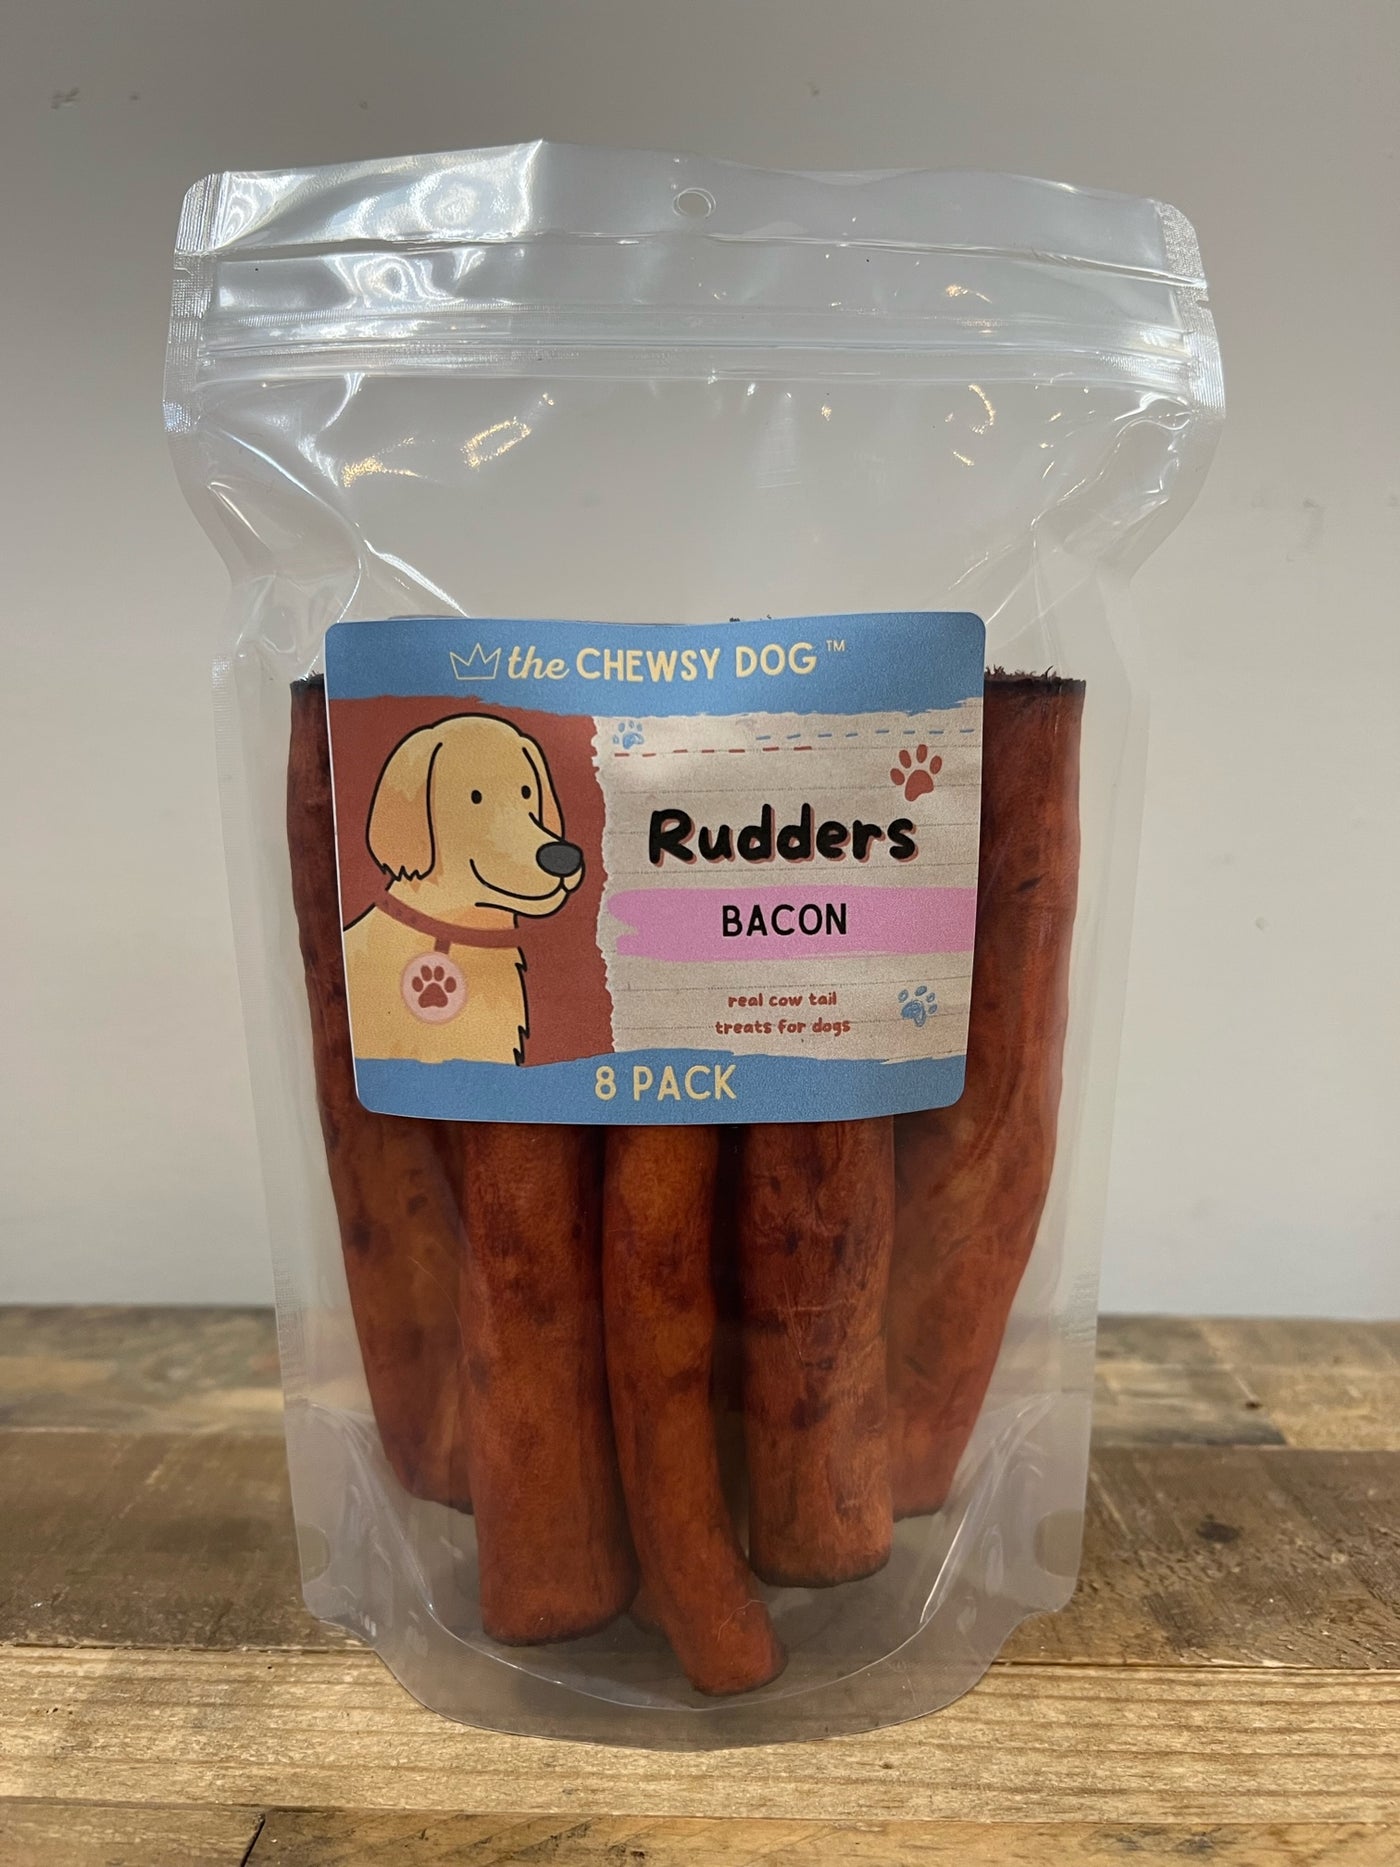 The Chewsy Dog Rudders - Bacon